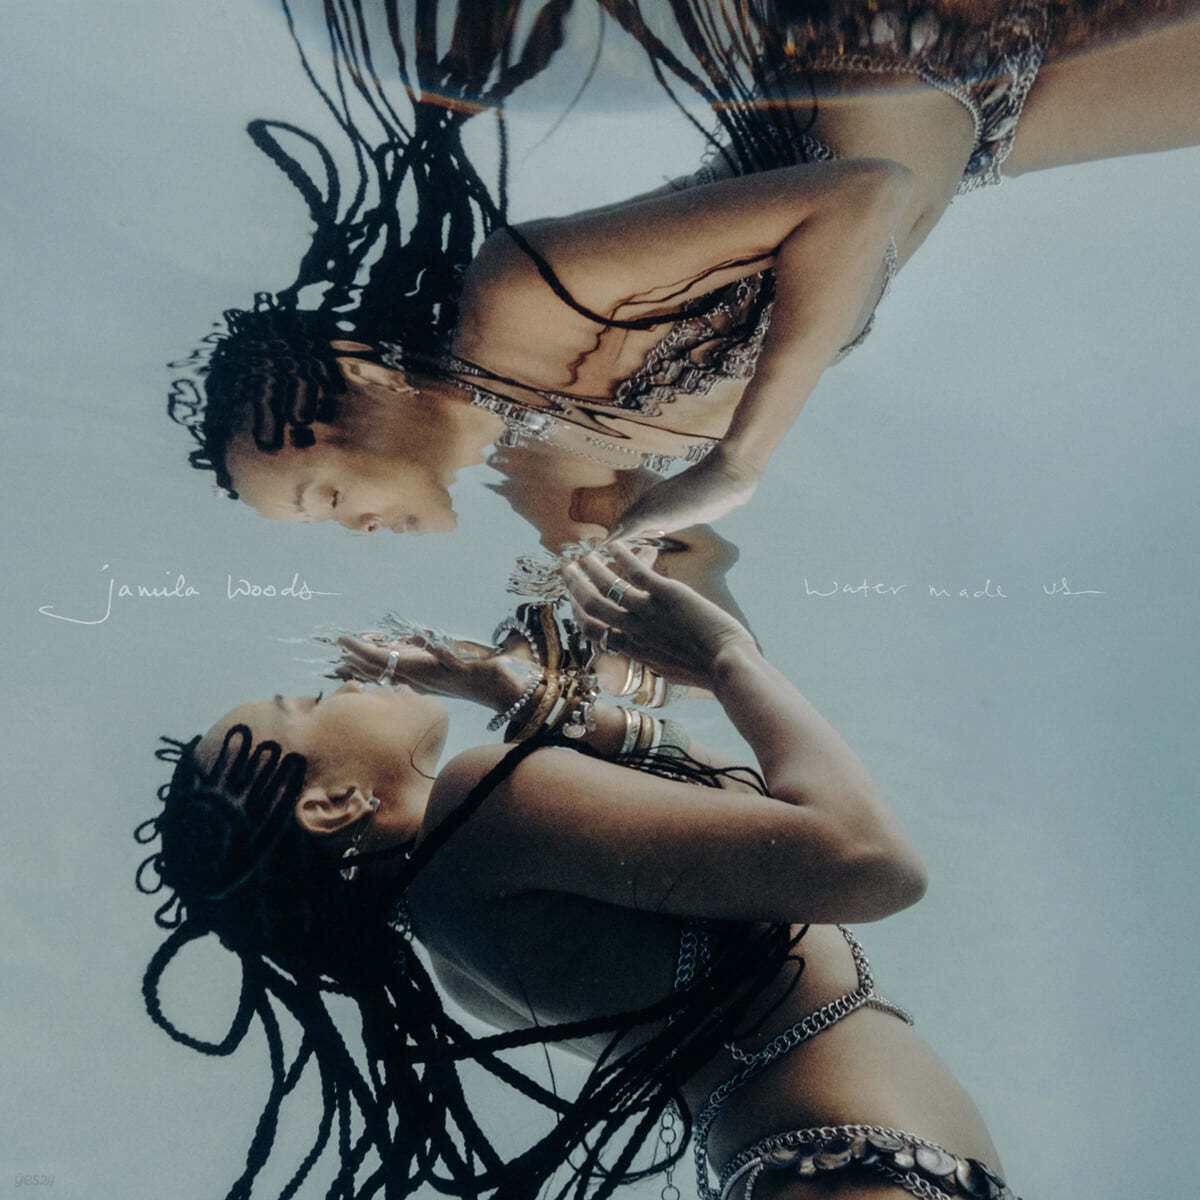 Jamila Woods (자밀라 우즈) - Water Made Us [LP]